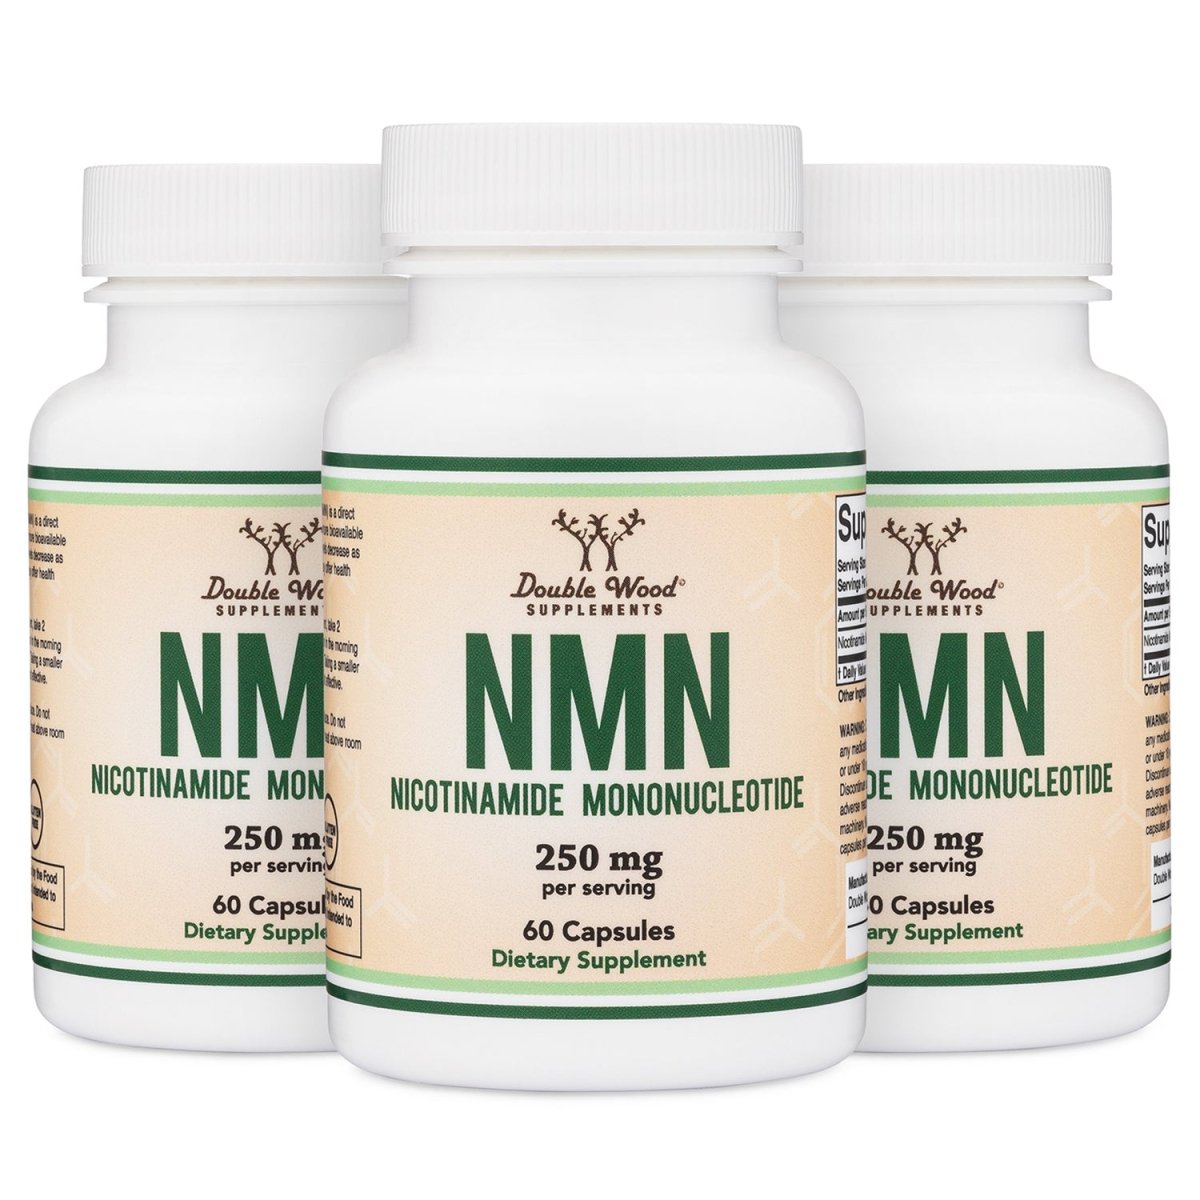 Nicotinamide Mononucleotide (NMN) - Double Wood Supplements